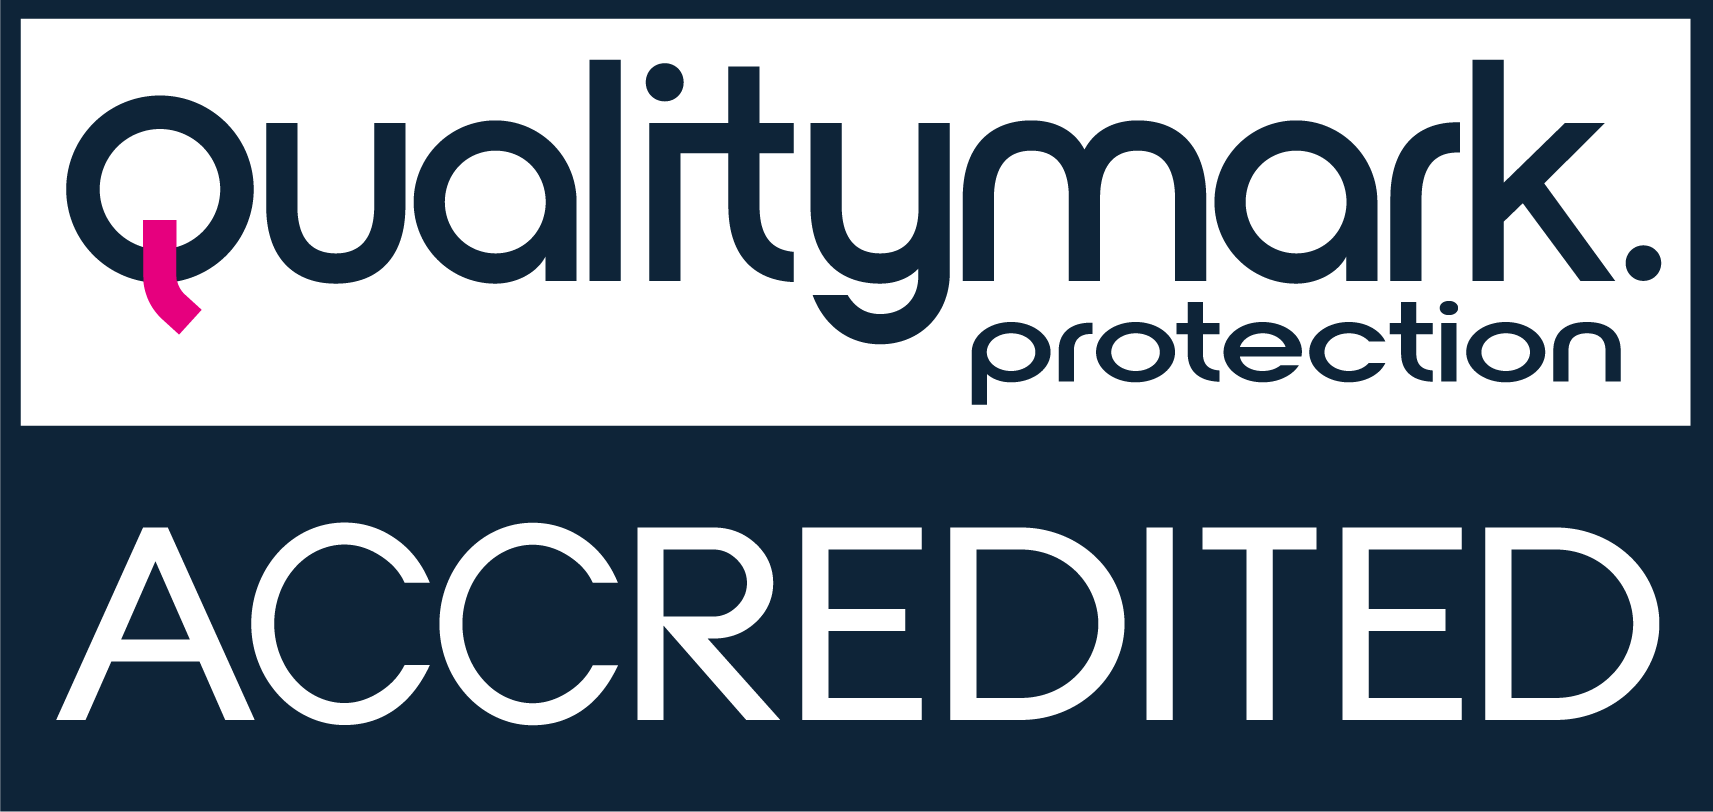 qualitymark-protection-accredited-logo